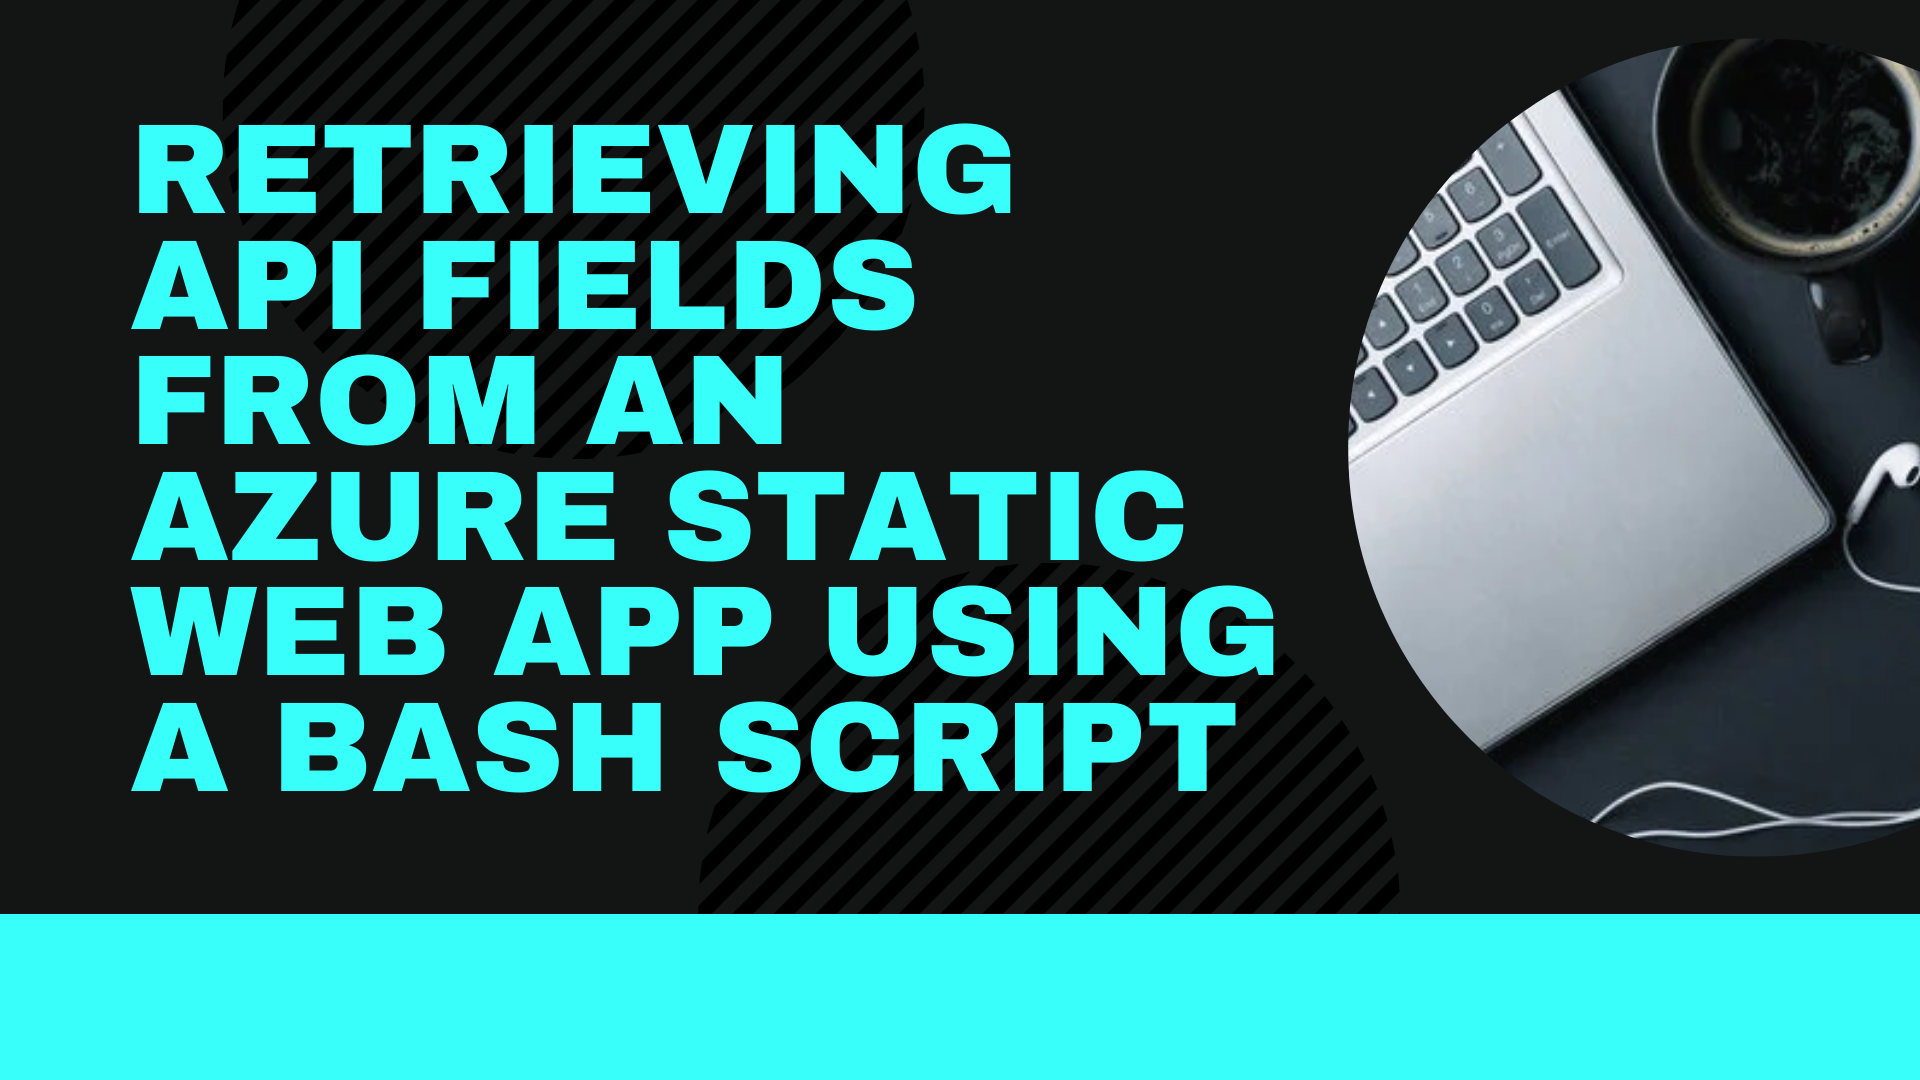 Retrieving API Fields from an Azure Static Web App Using a Bash Script